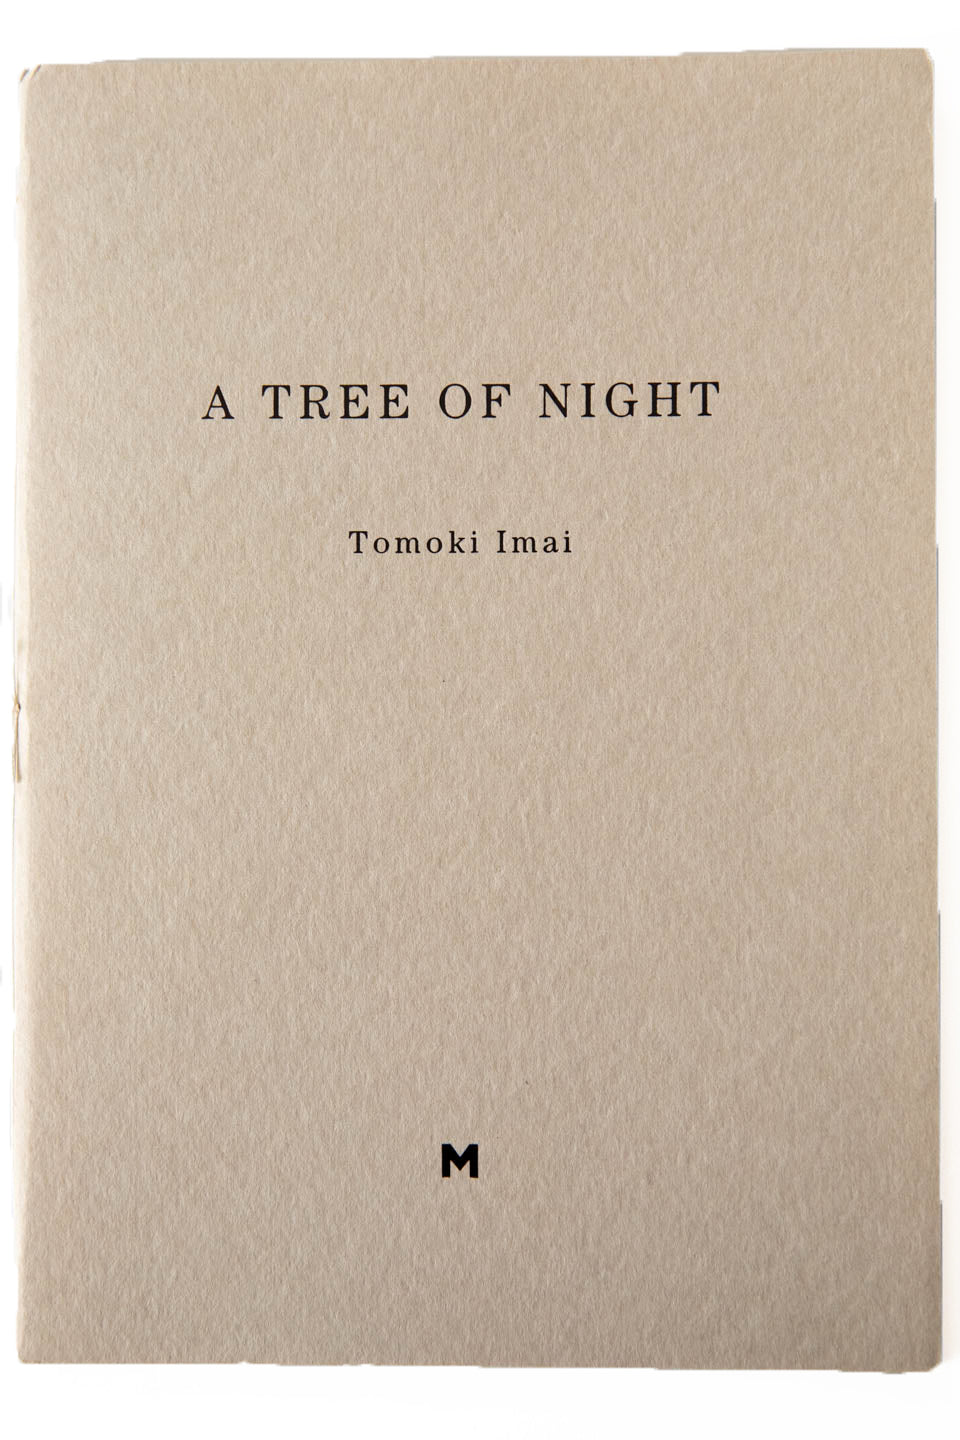 A TREE OF NIGHT